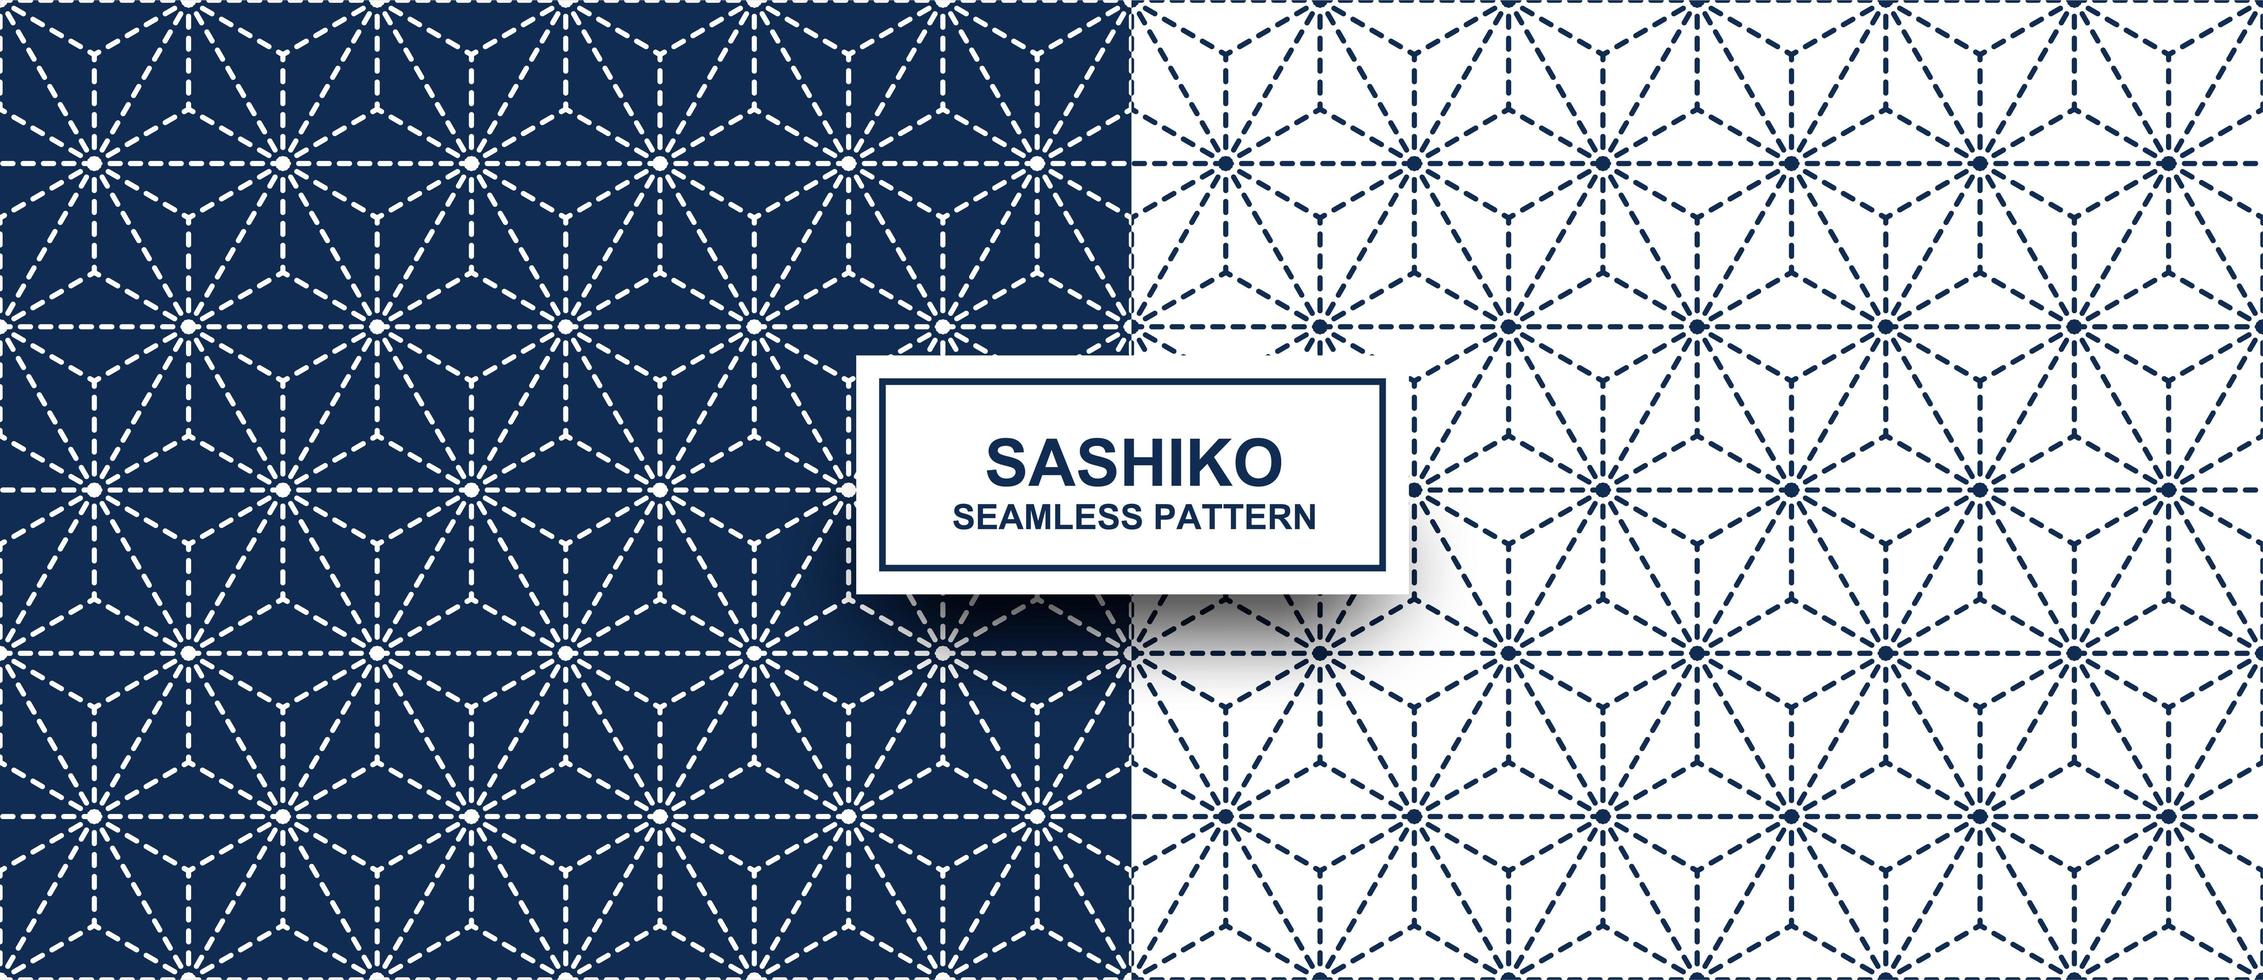 Geometric star shape sashiko seamless pattern vector